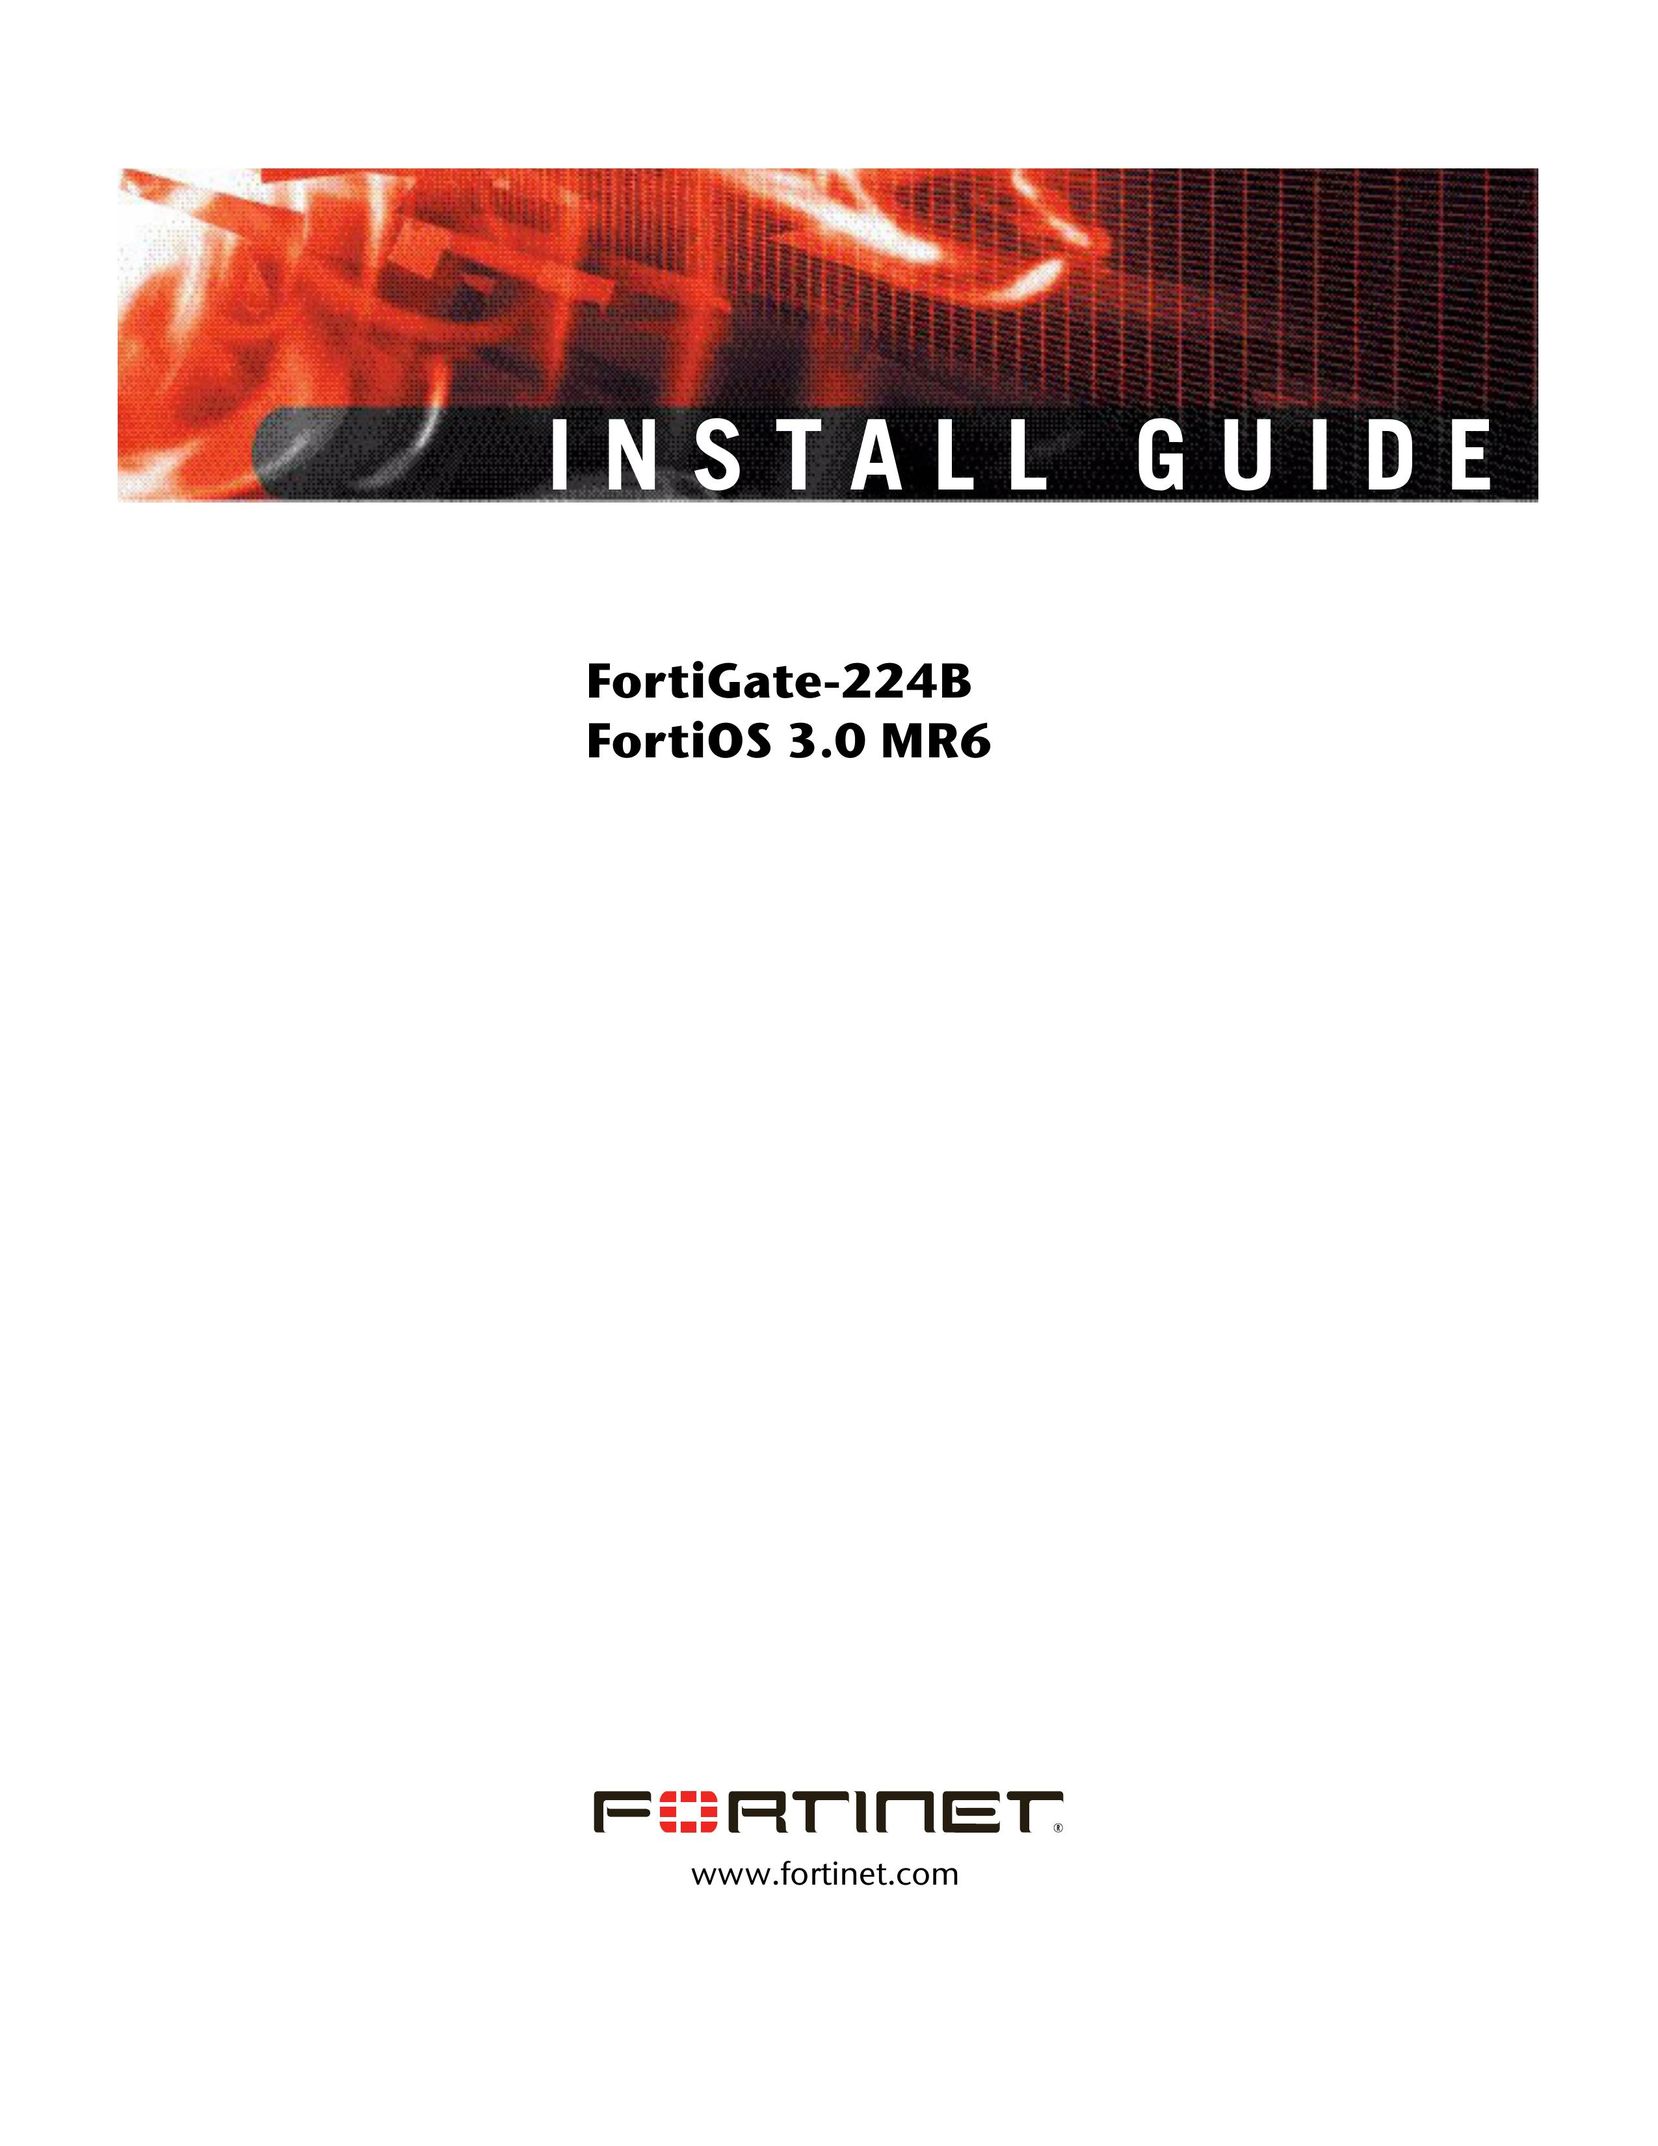 Fortinet 224B Network Card User Manual